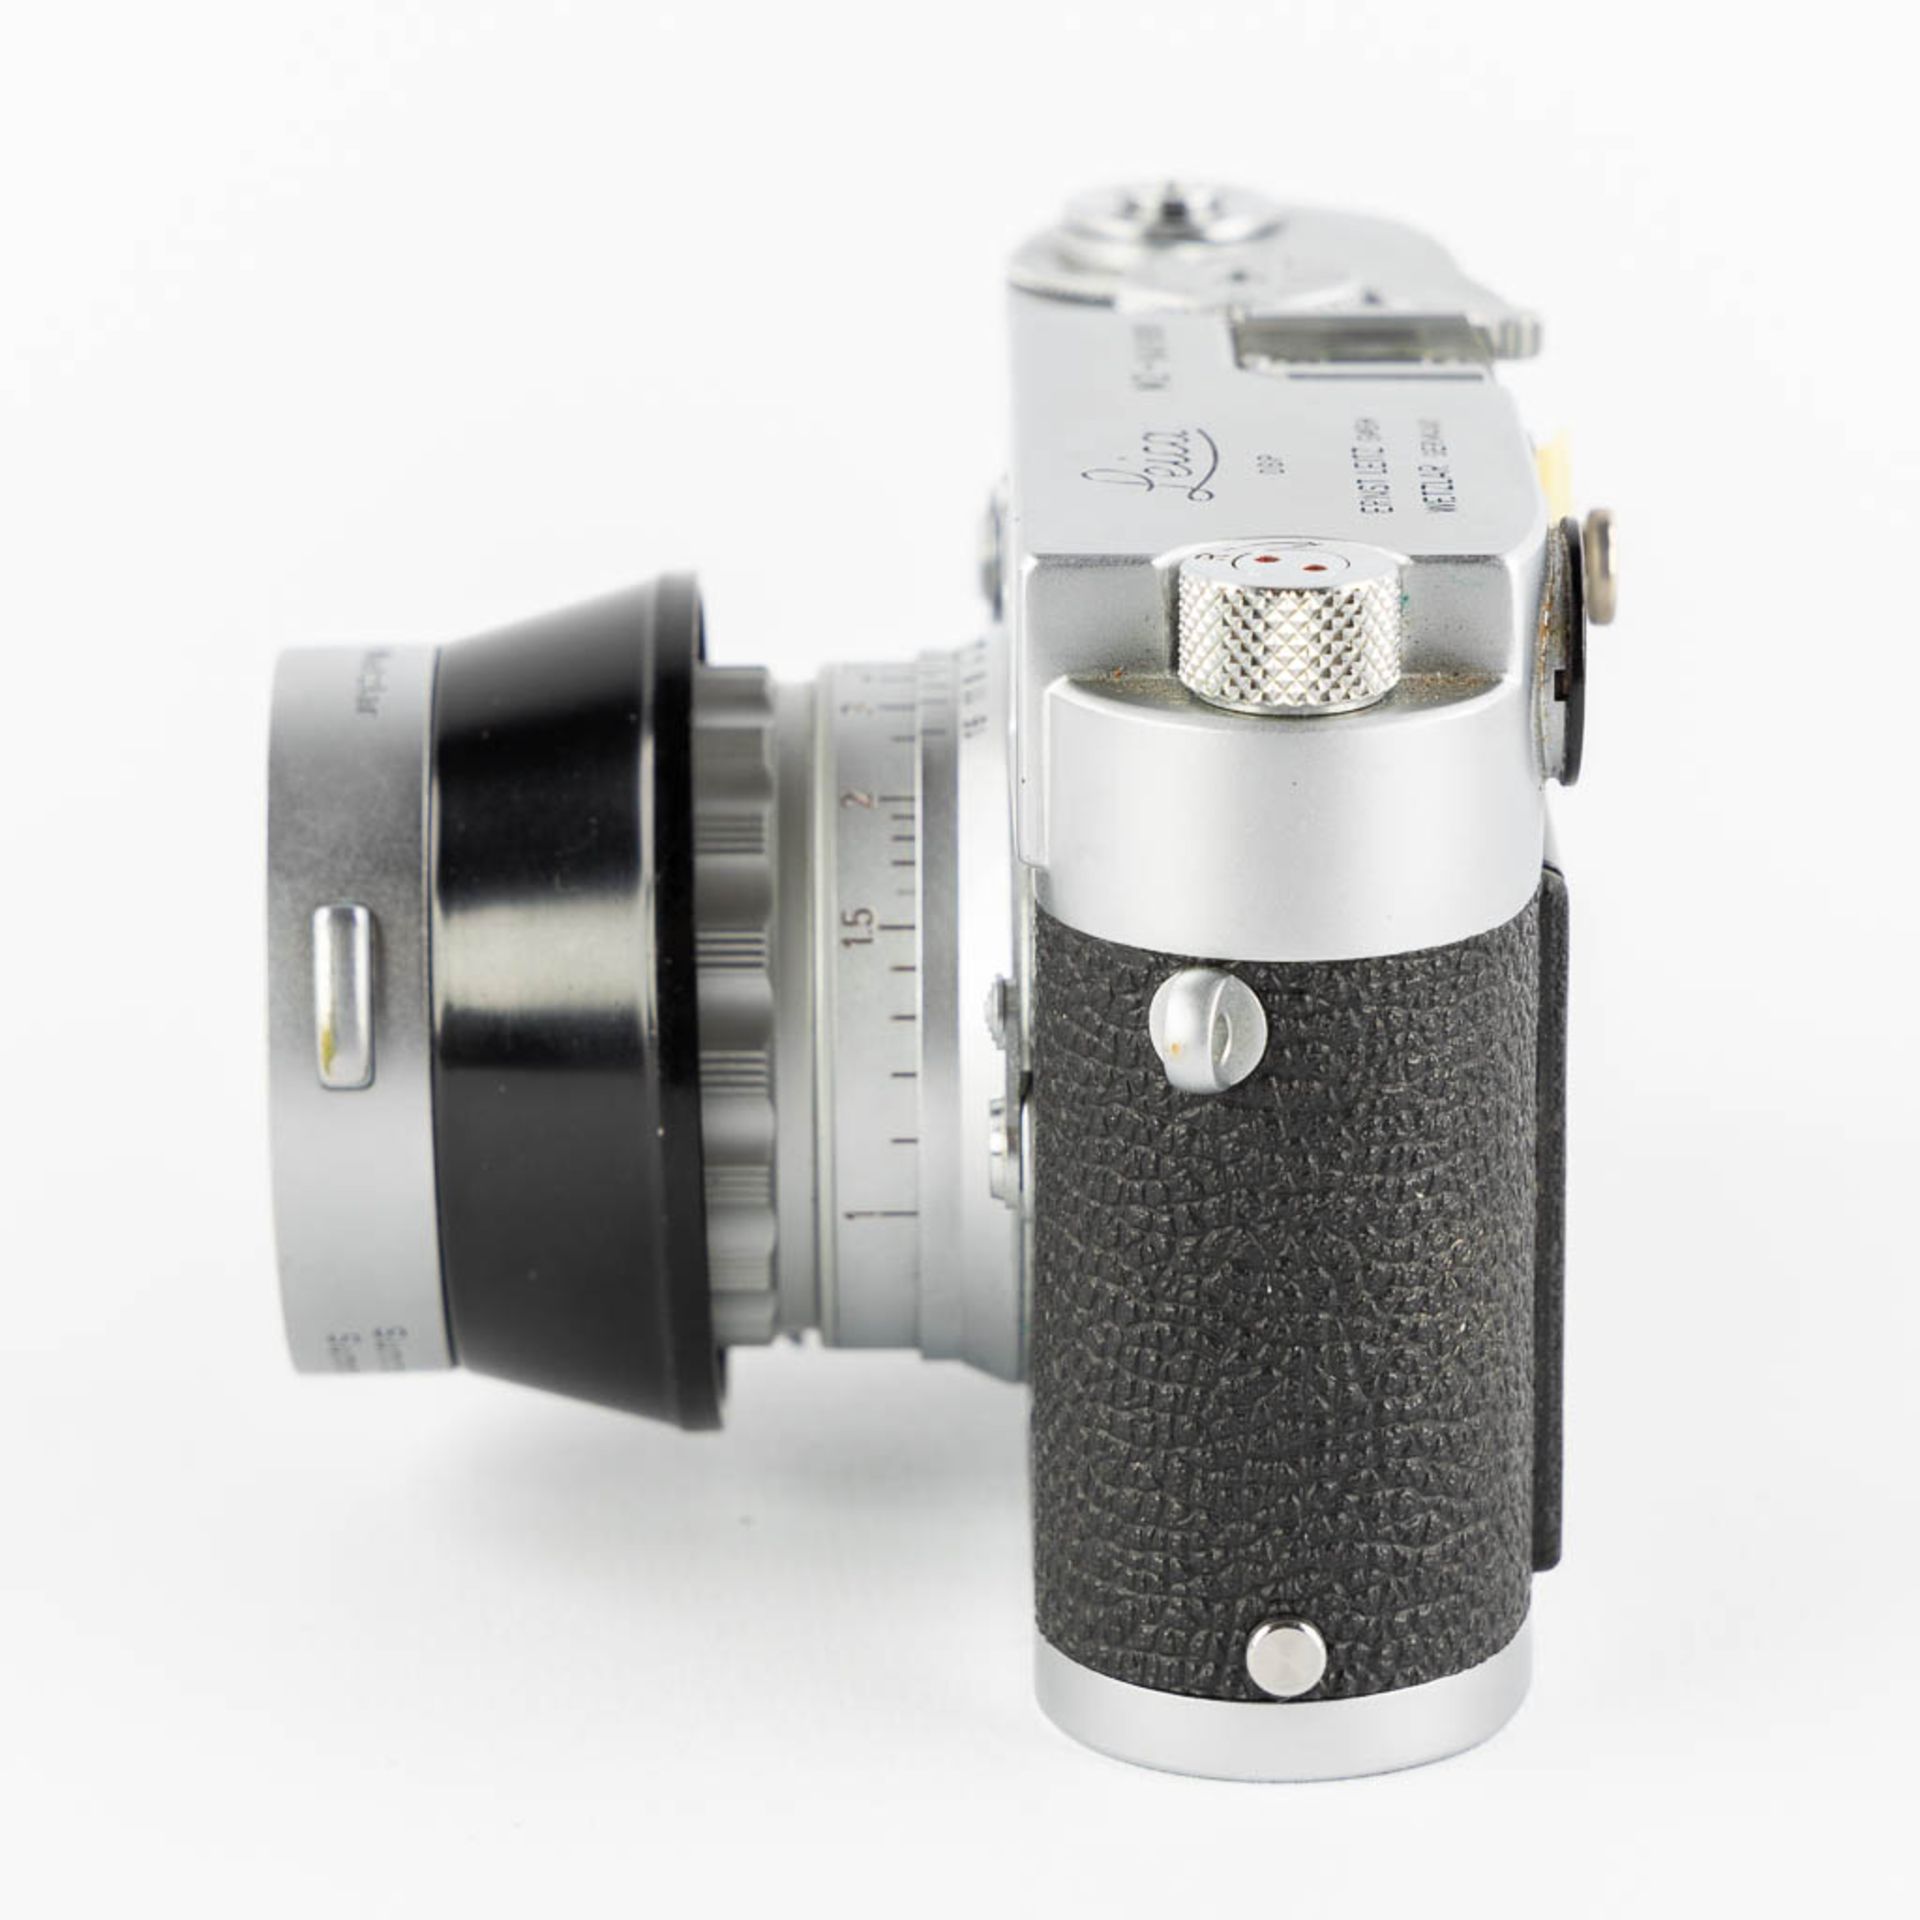 Leica, model M2, an analog photocamera. (L:8 x W:14 x H:7,6 cm) - Bild 5 aus 15